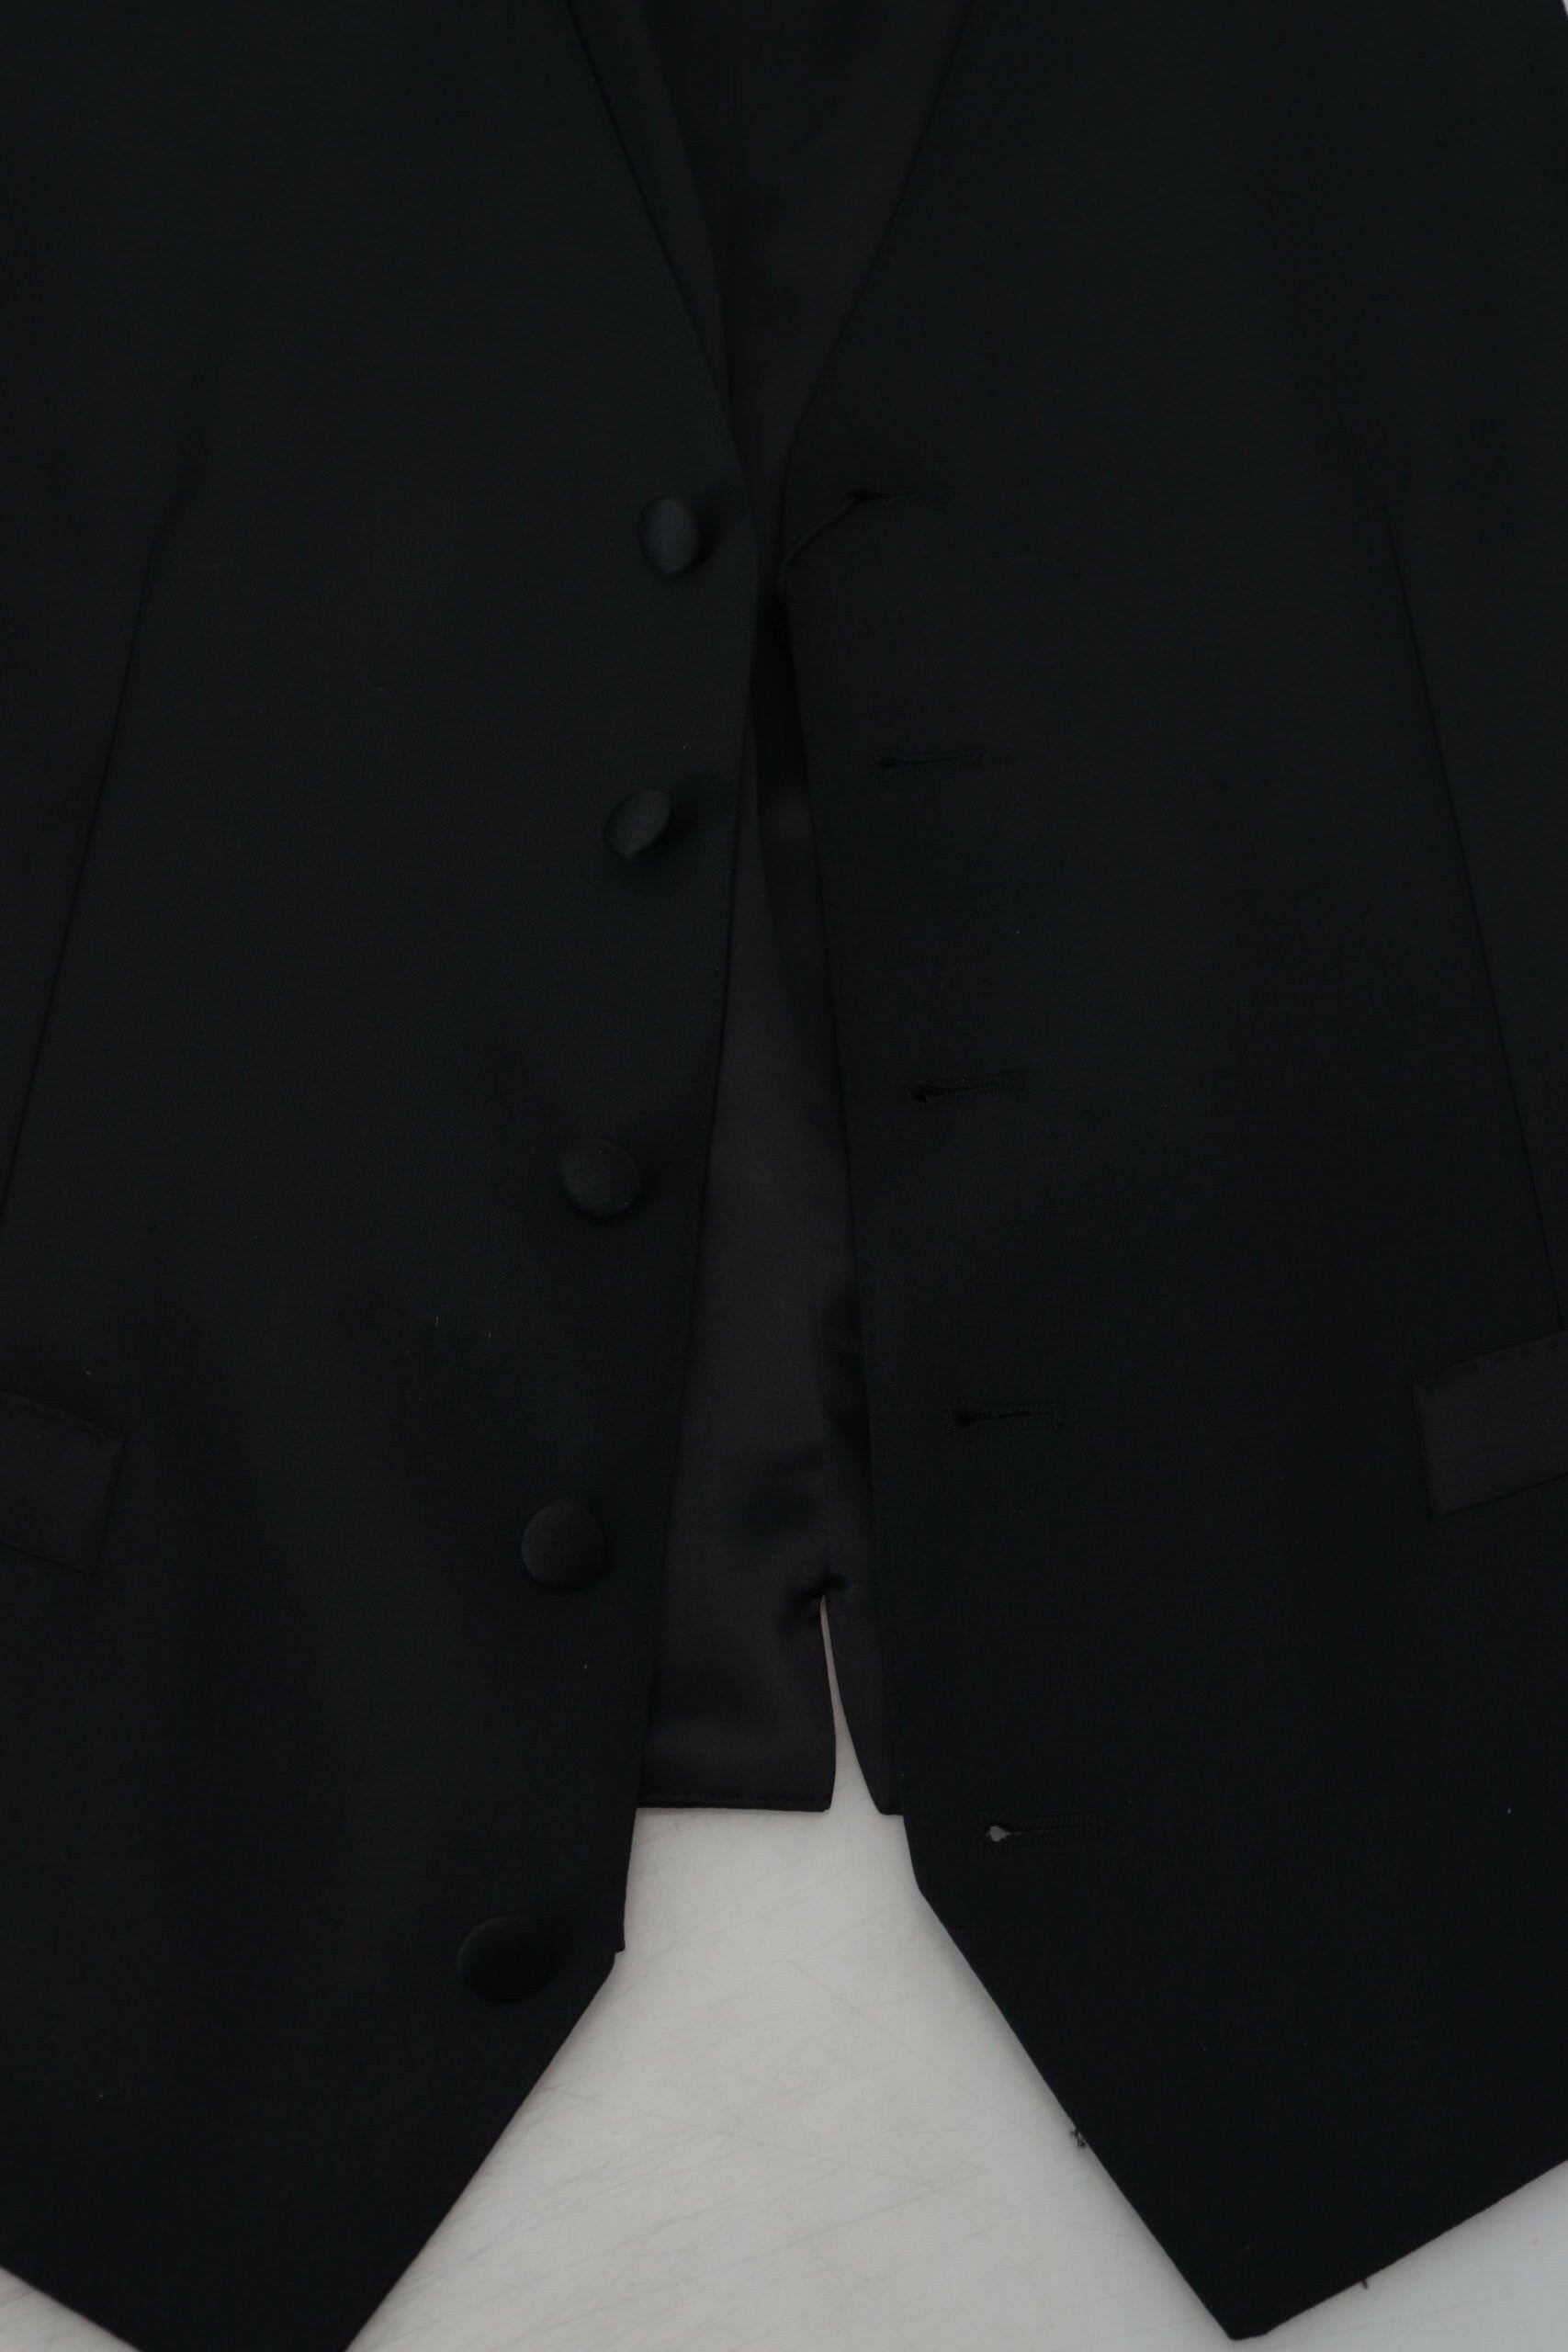 Dolce & Gabbana Black Virgin Wool Waistcoat Formal Dress Vest - GENUINE AUTHENTIC BRAND LLC  